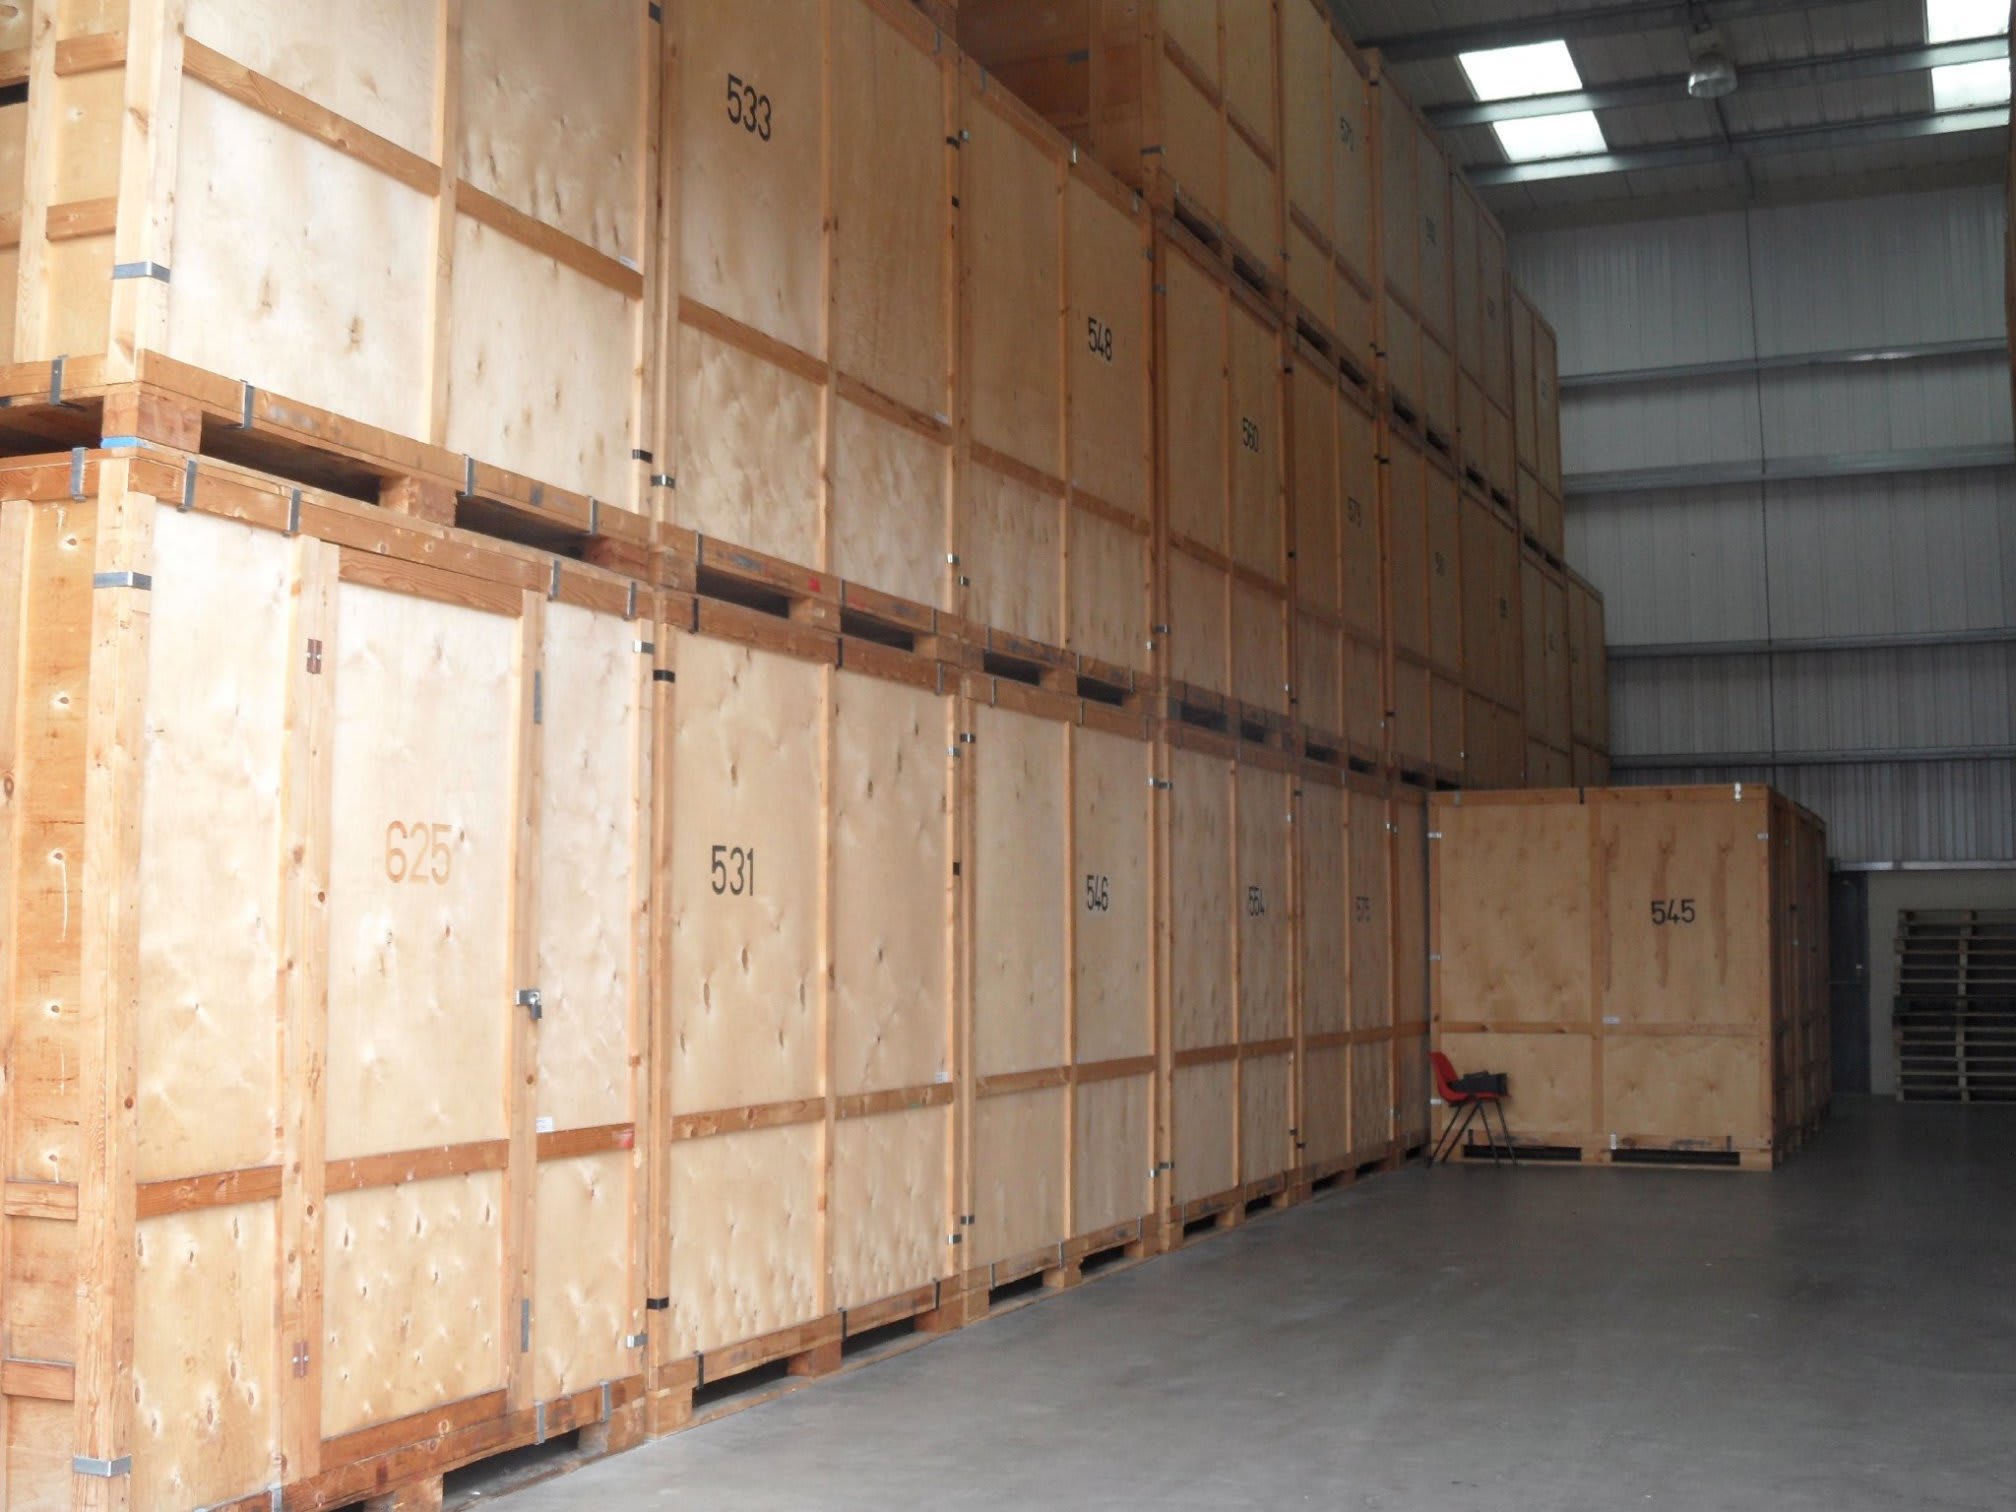 Moving Solutions Removals & Storage Cheltenham 01242 701754